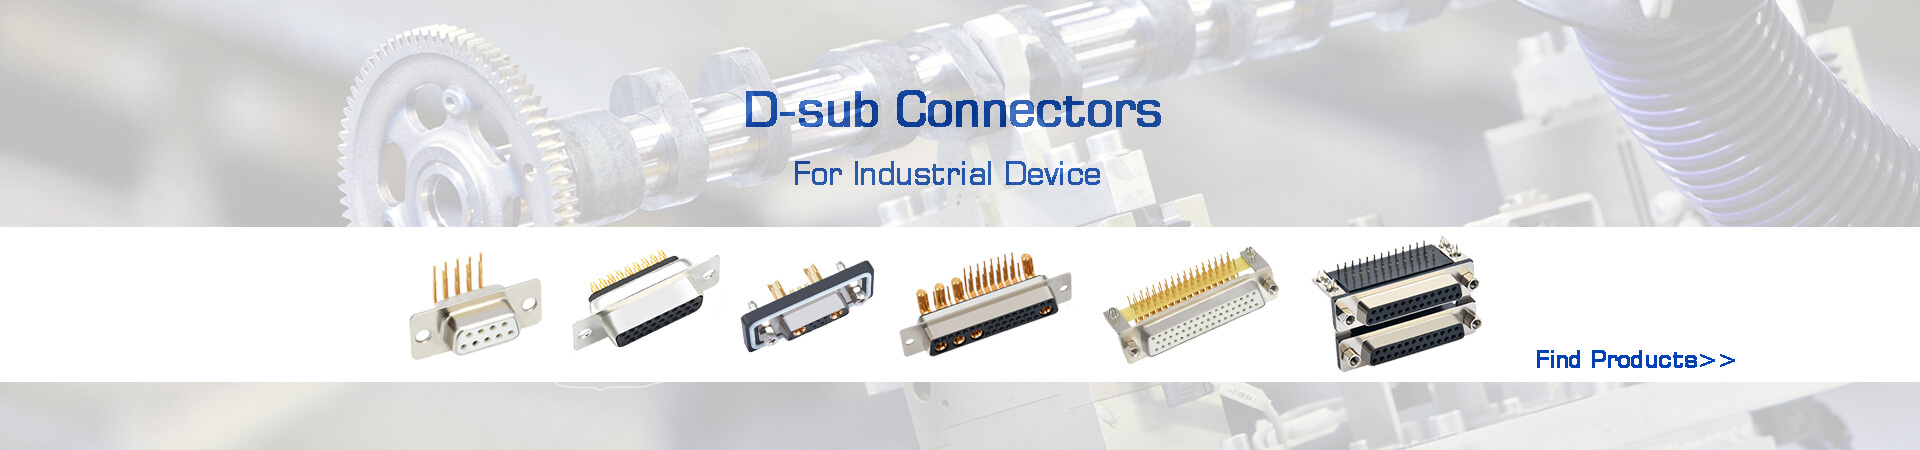 D-sub Connector